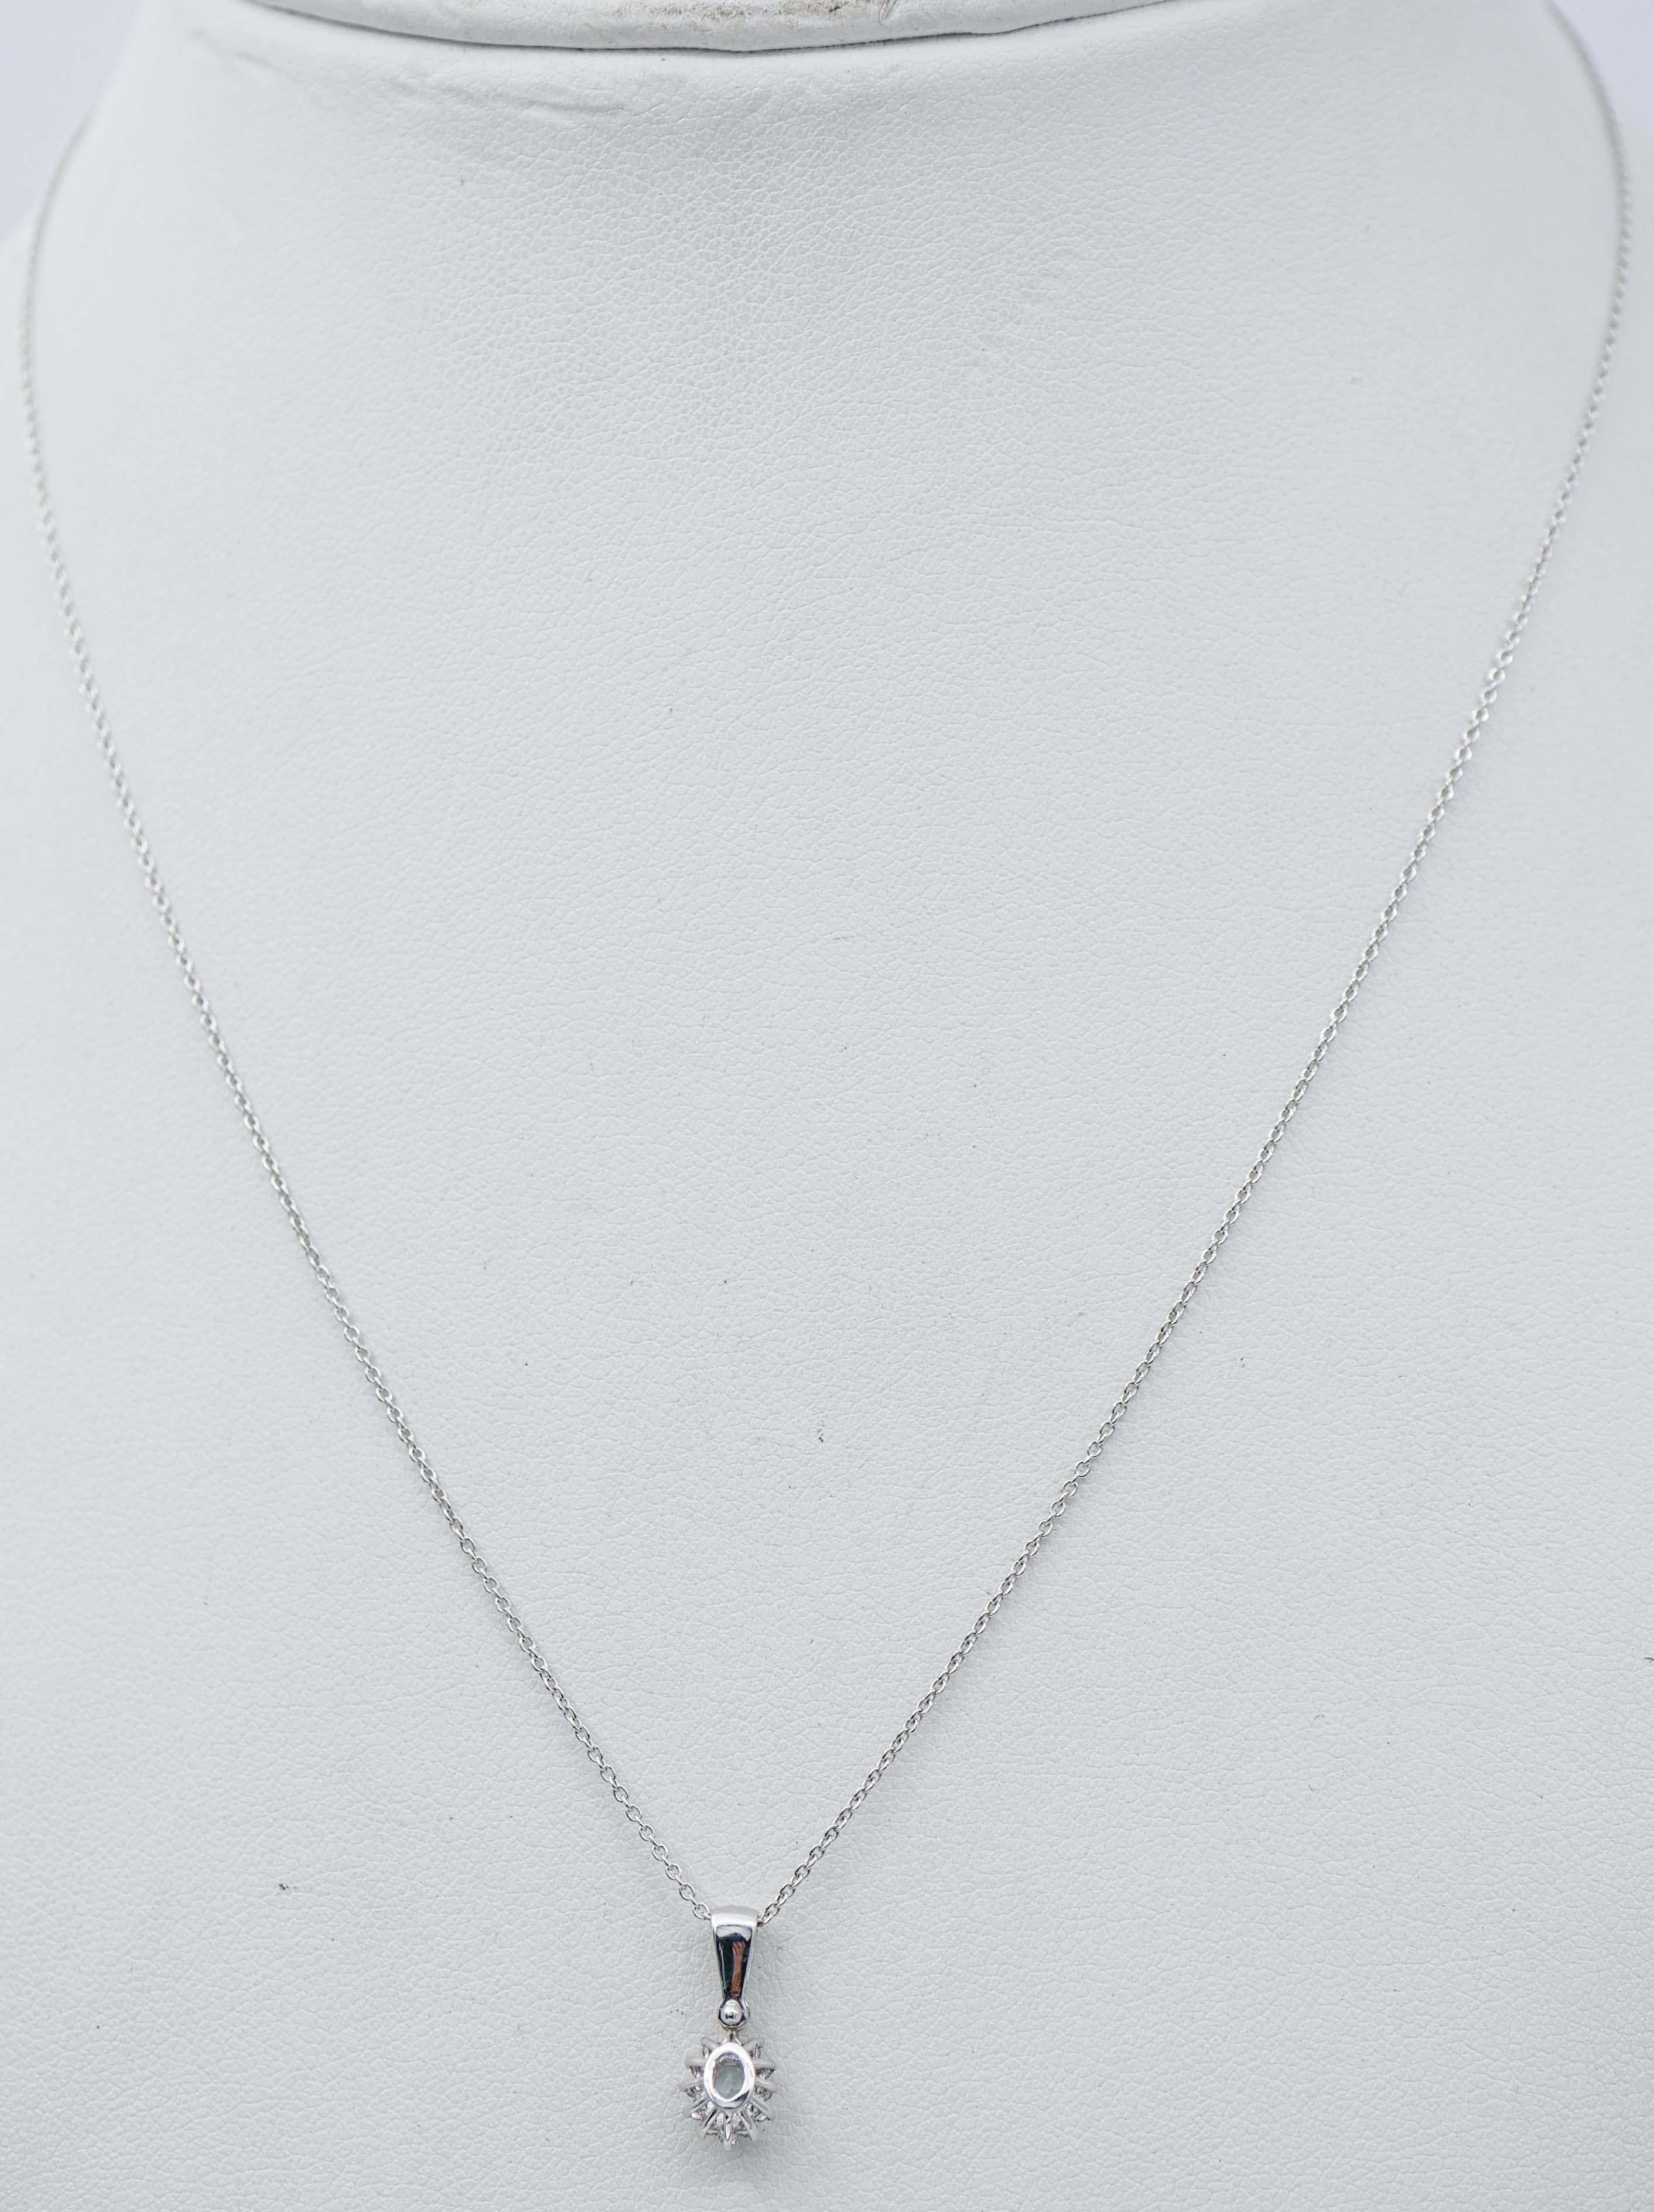 Mixed Cut Aquamarine, Diamonds, 18 Karat White Gold Pendant Necklace. For Sale